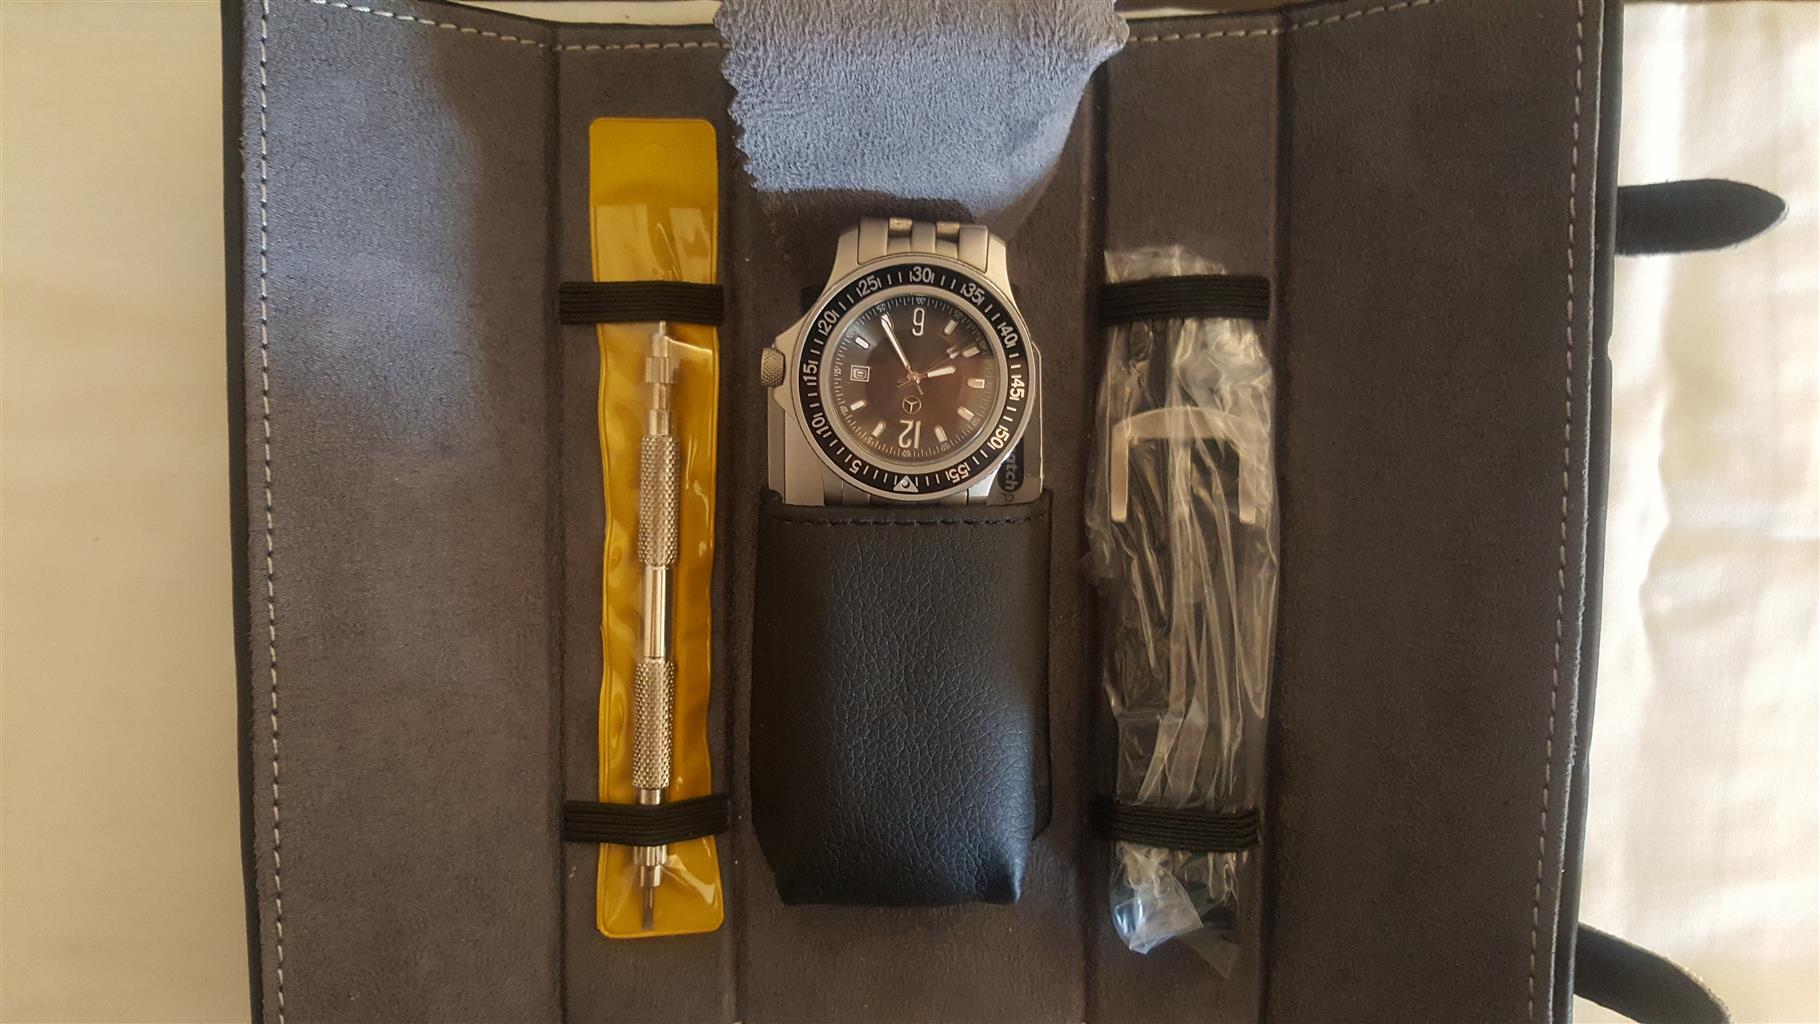 Original Mercedes Benz watch in casing with certificate